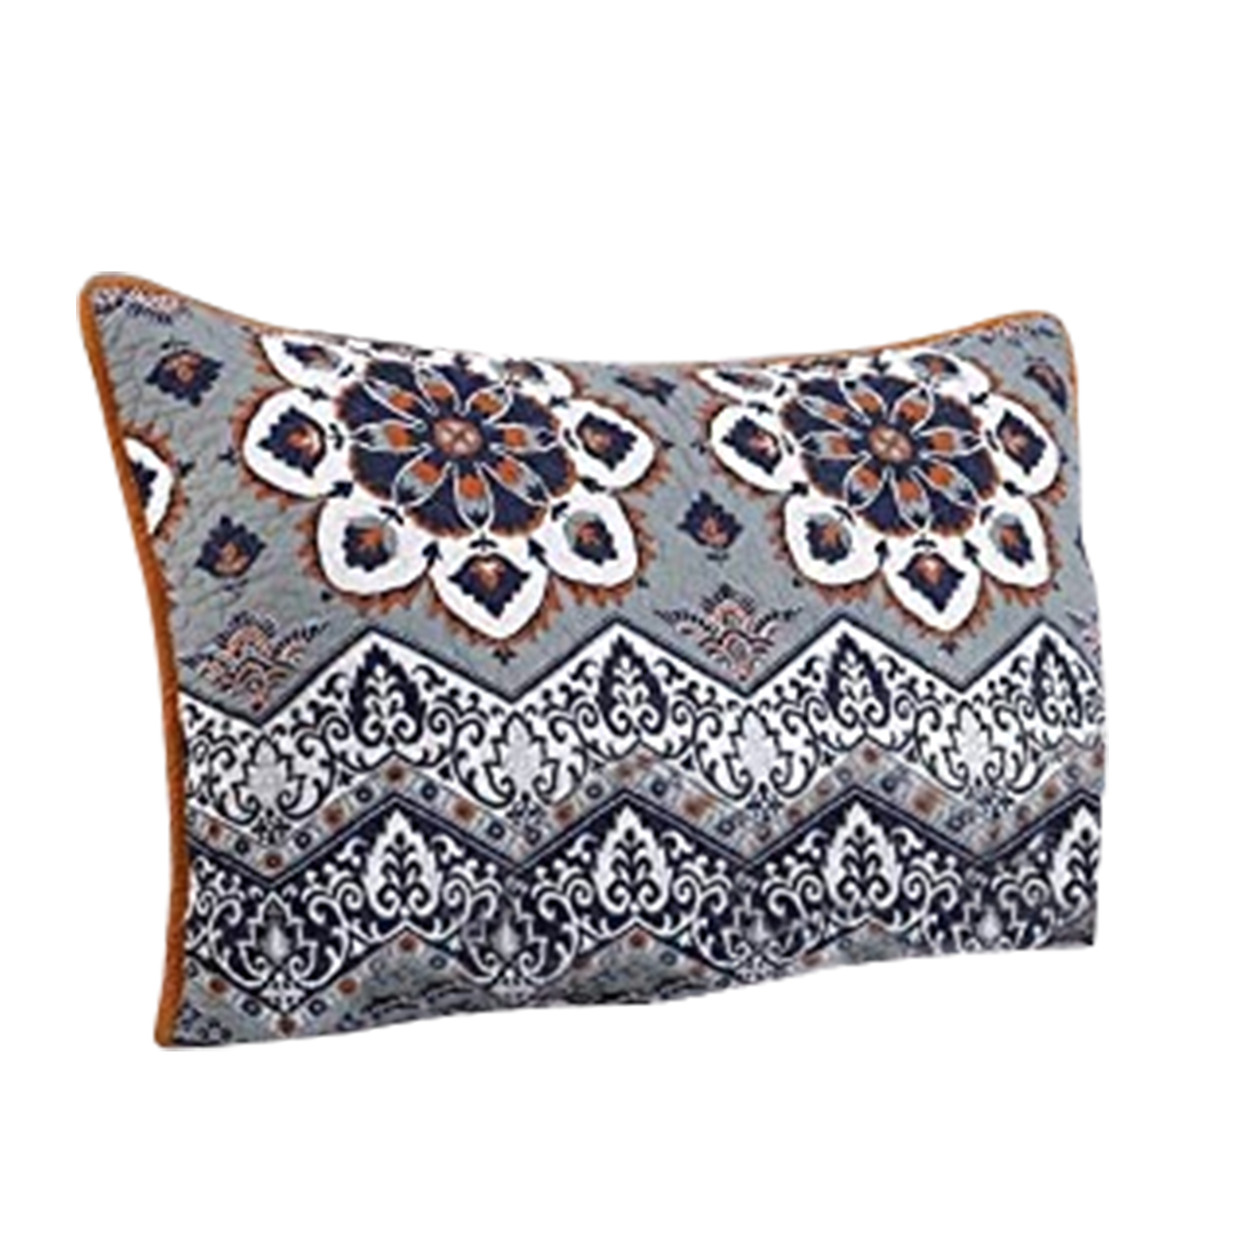 Damask Print King Quilt Set With Embroidered Pillows,Indigo Blue And Orange- Saltoro Sherpi